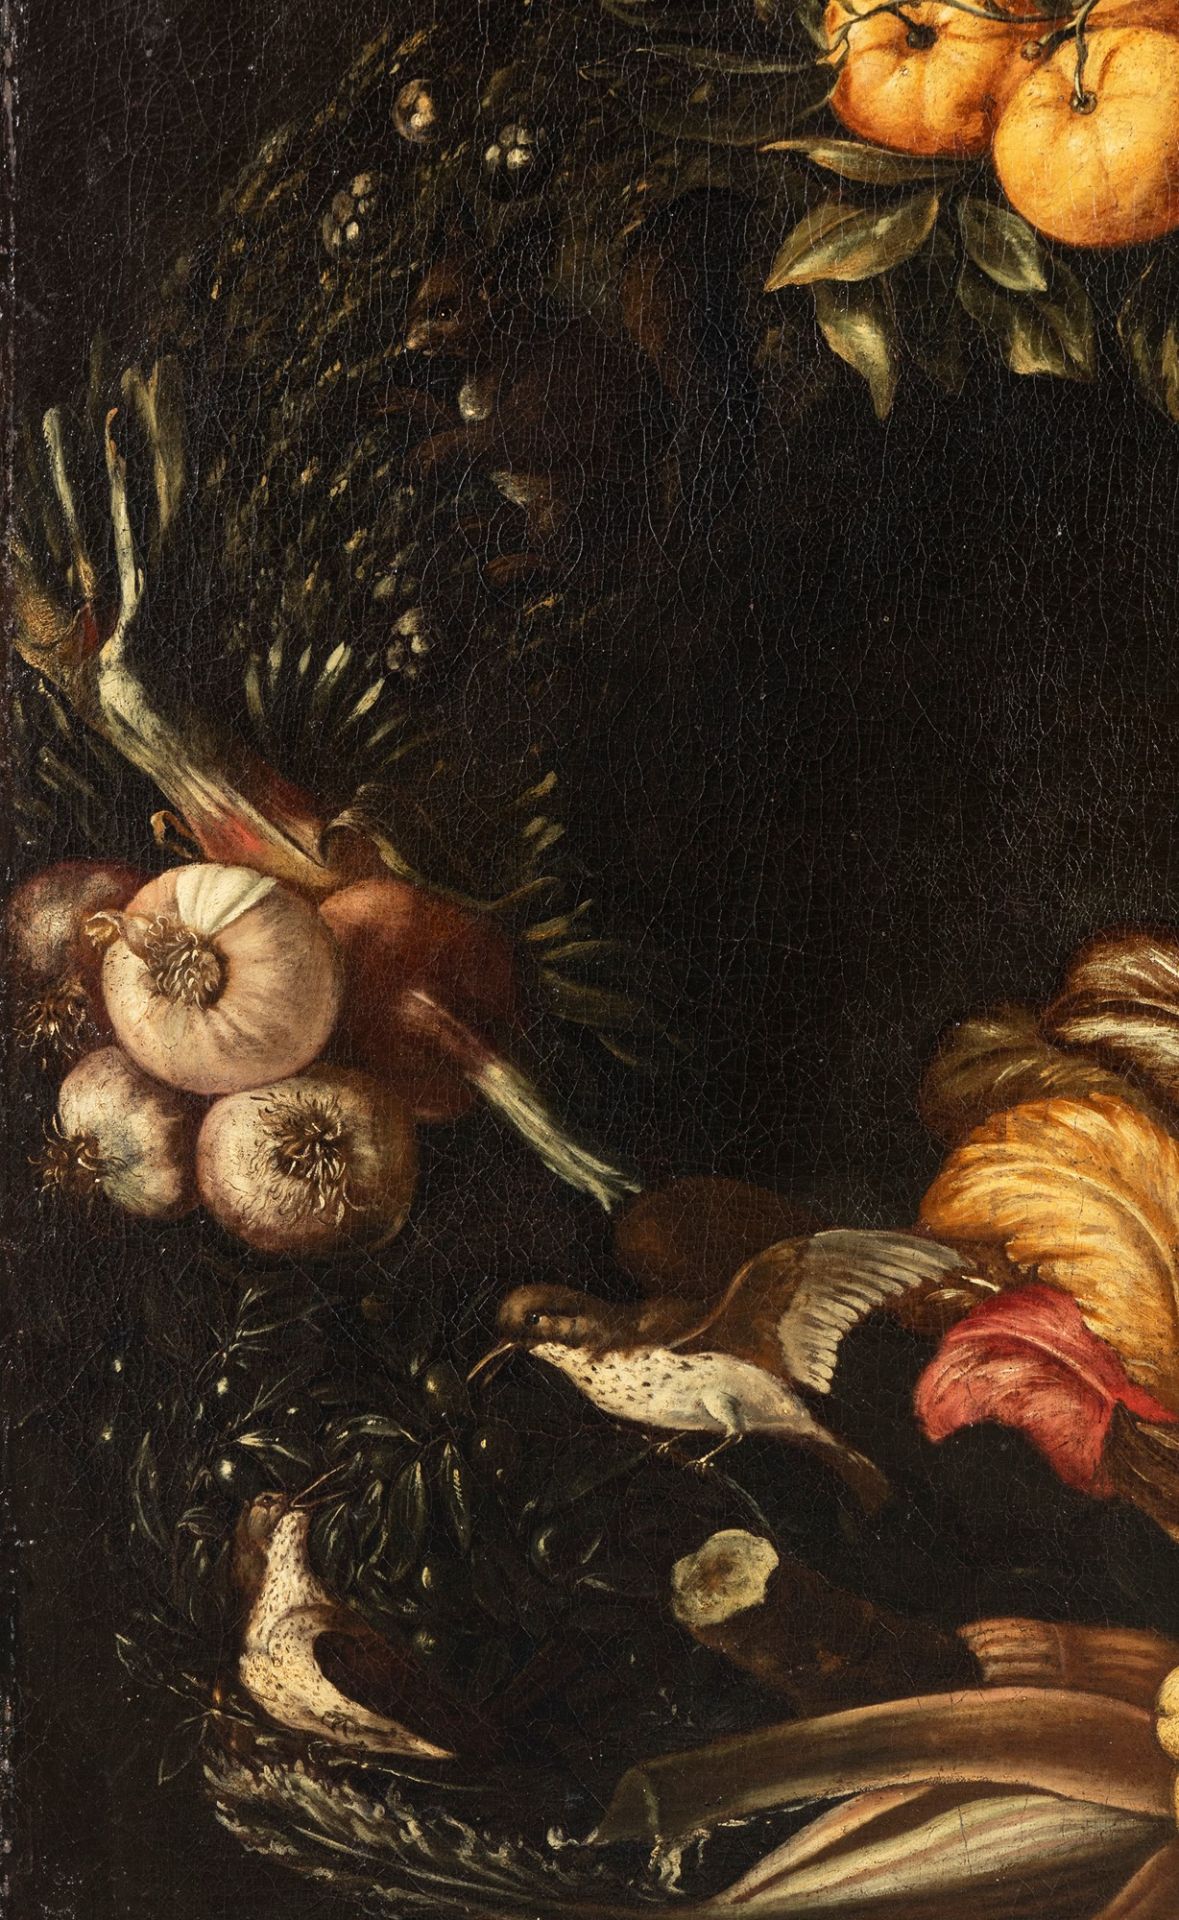 Neapolitan school, XVII century - Garland of fruit and vegetables with birds - Image 6 of 7